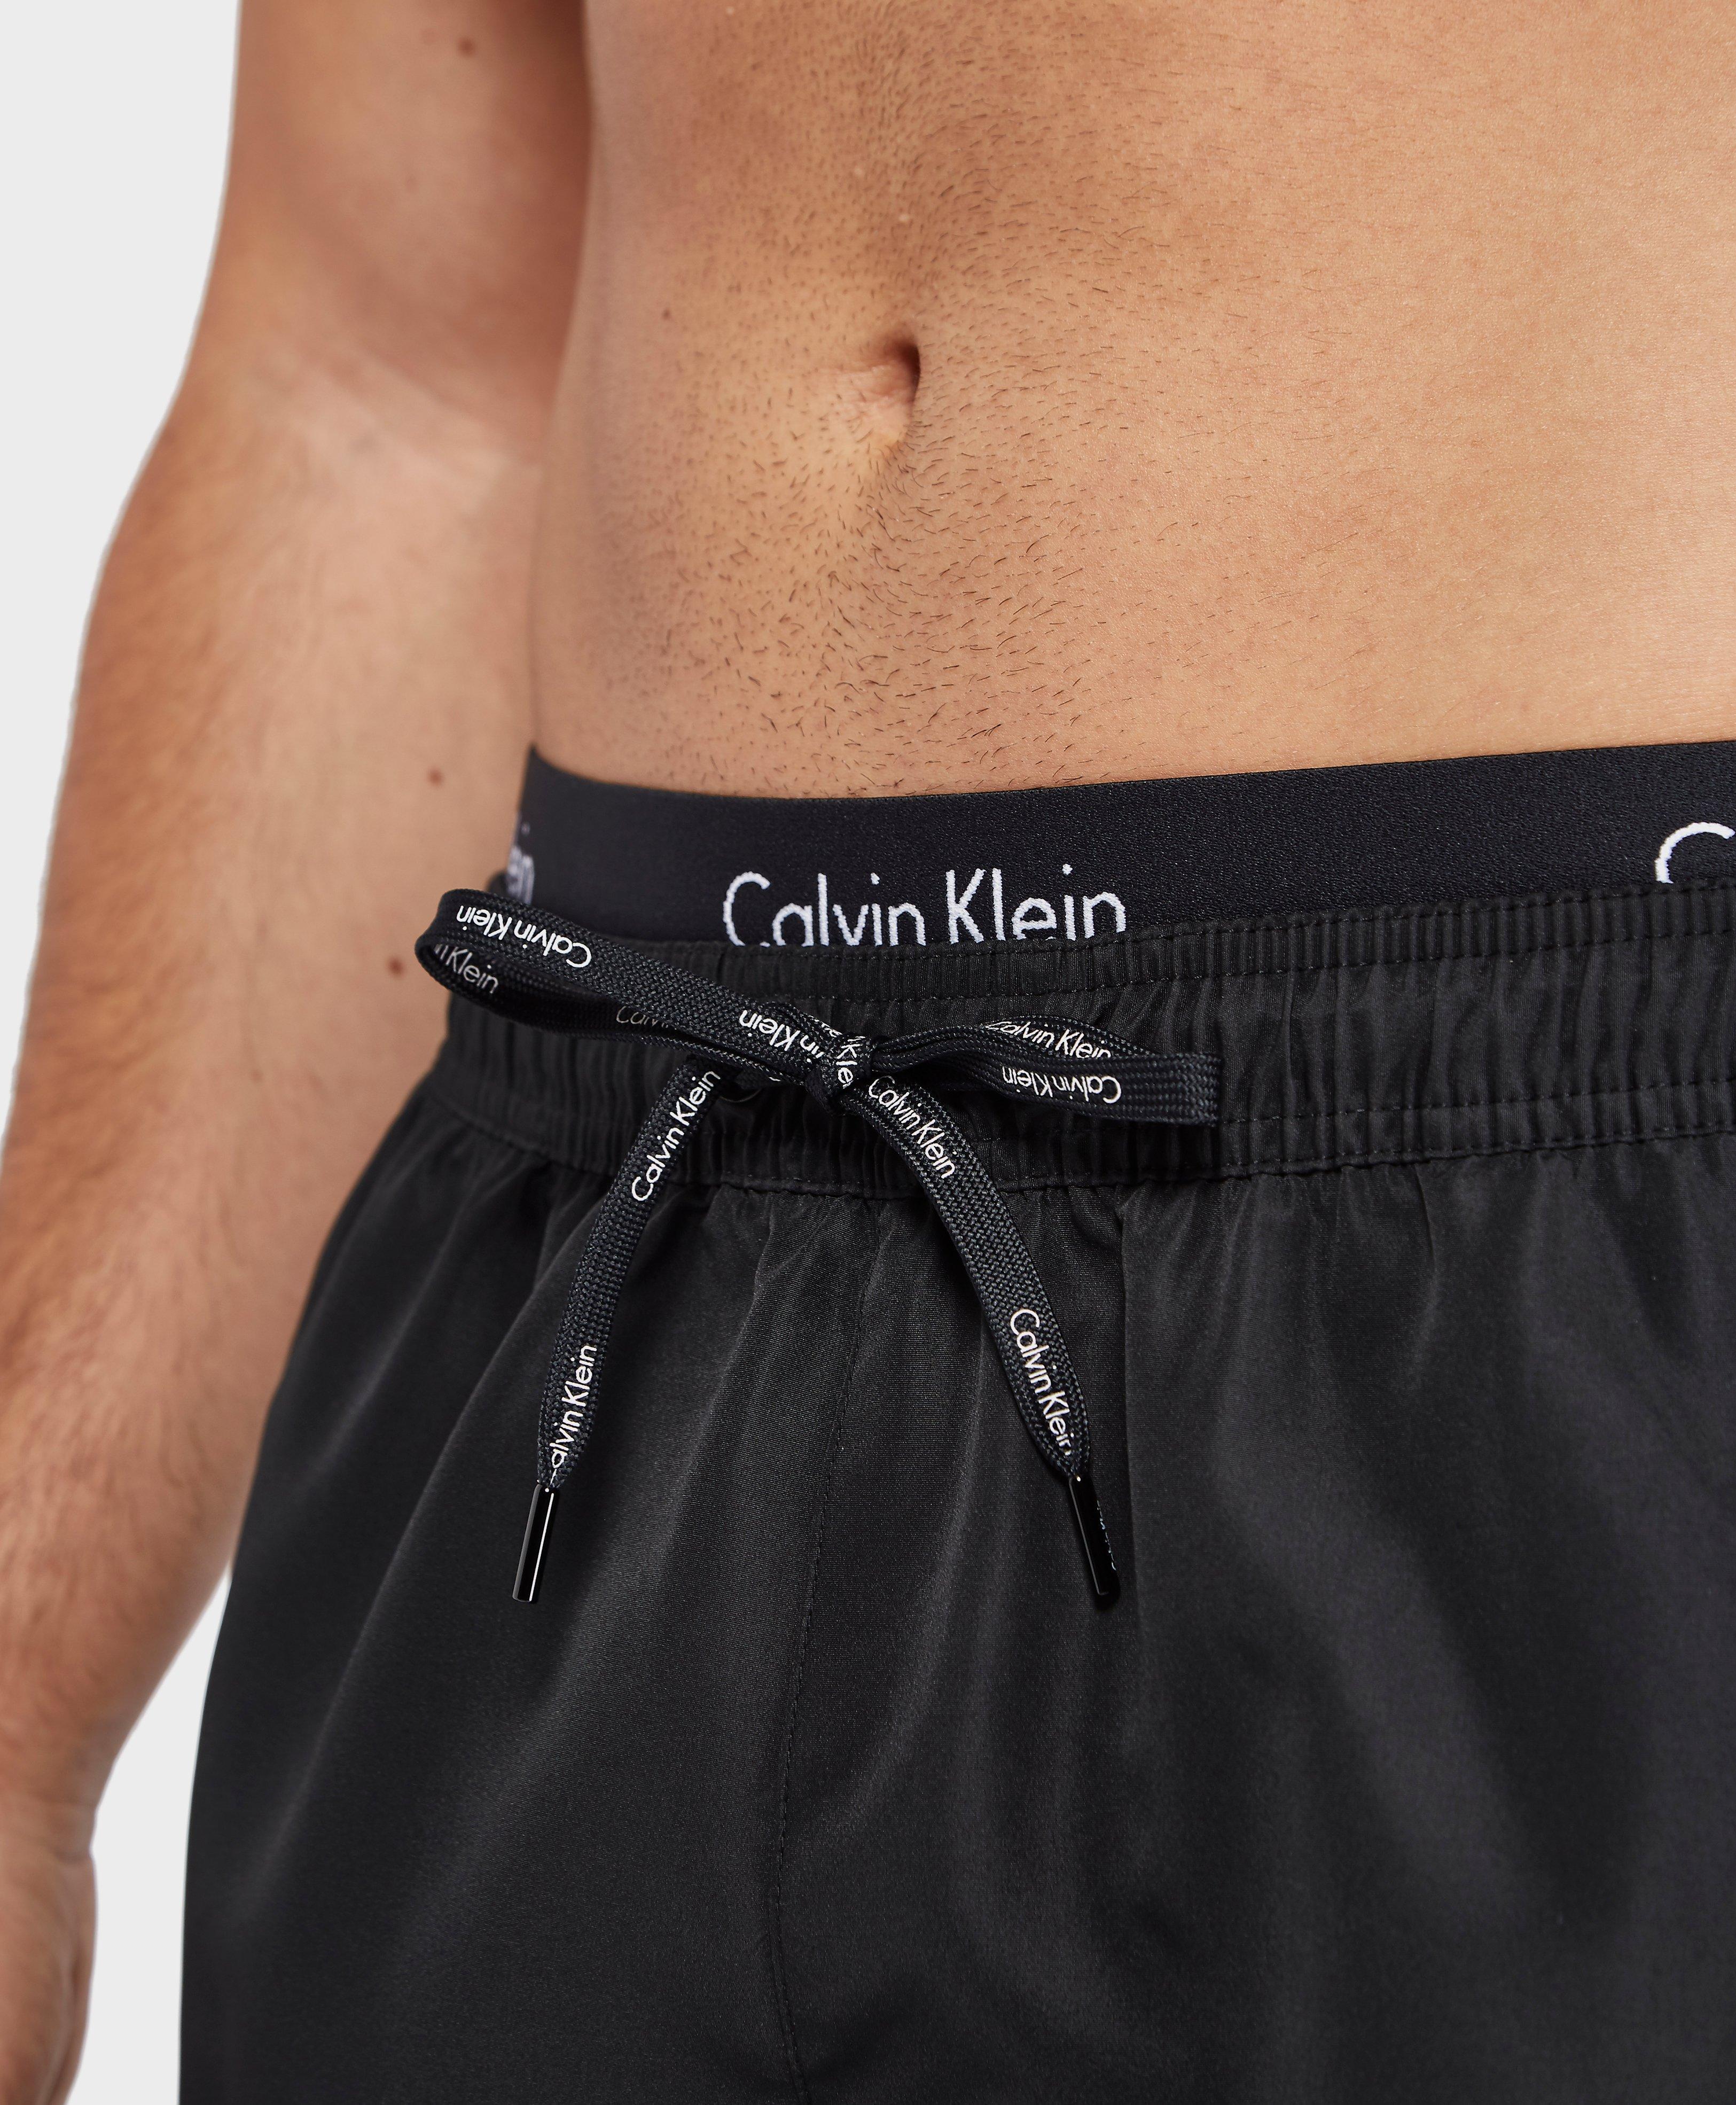 Lyst - Calvin Klein Double Waistband Swim Shorts in Black for Men